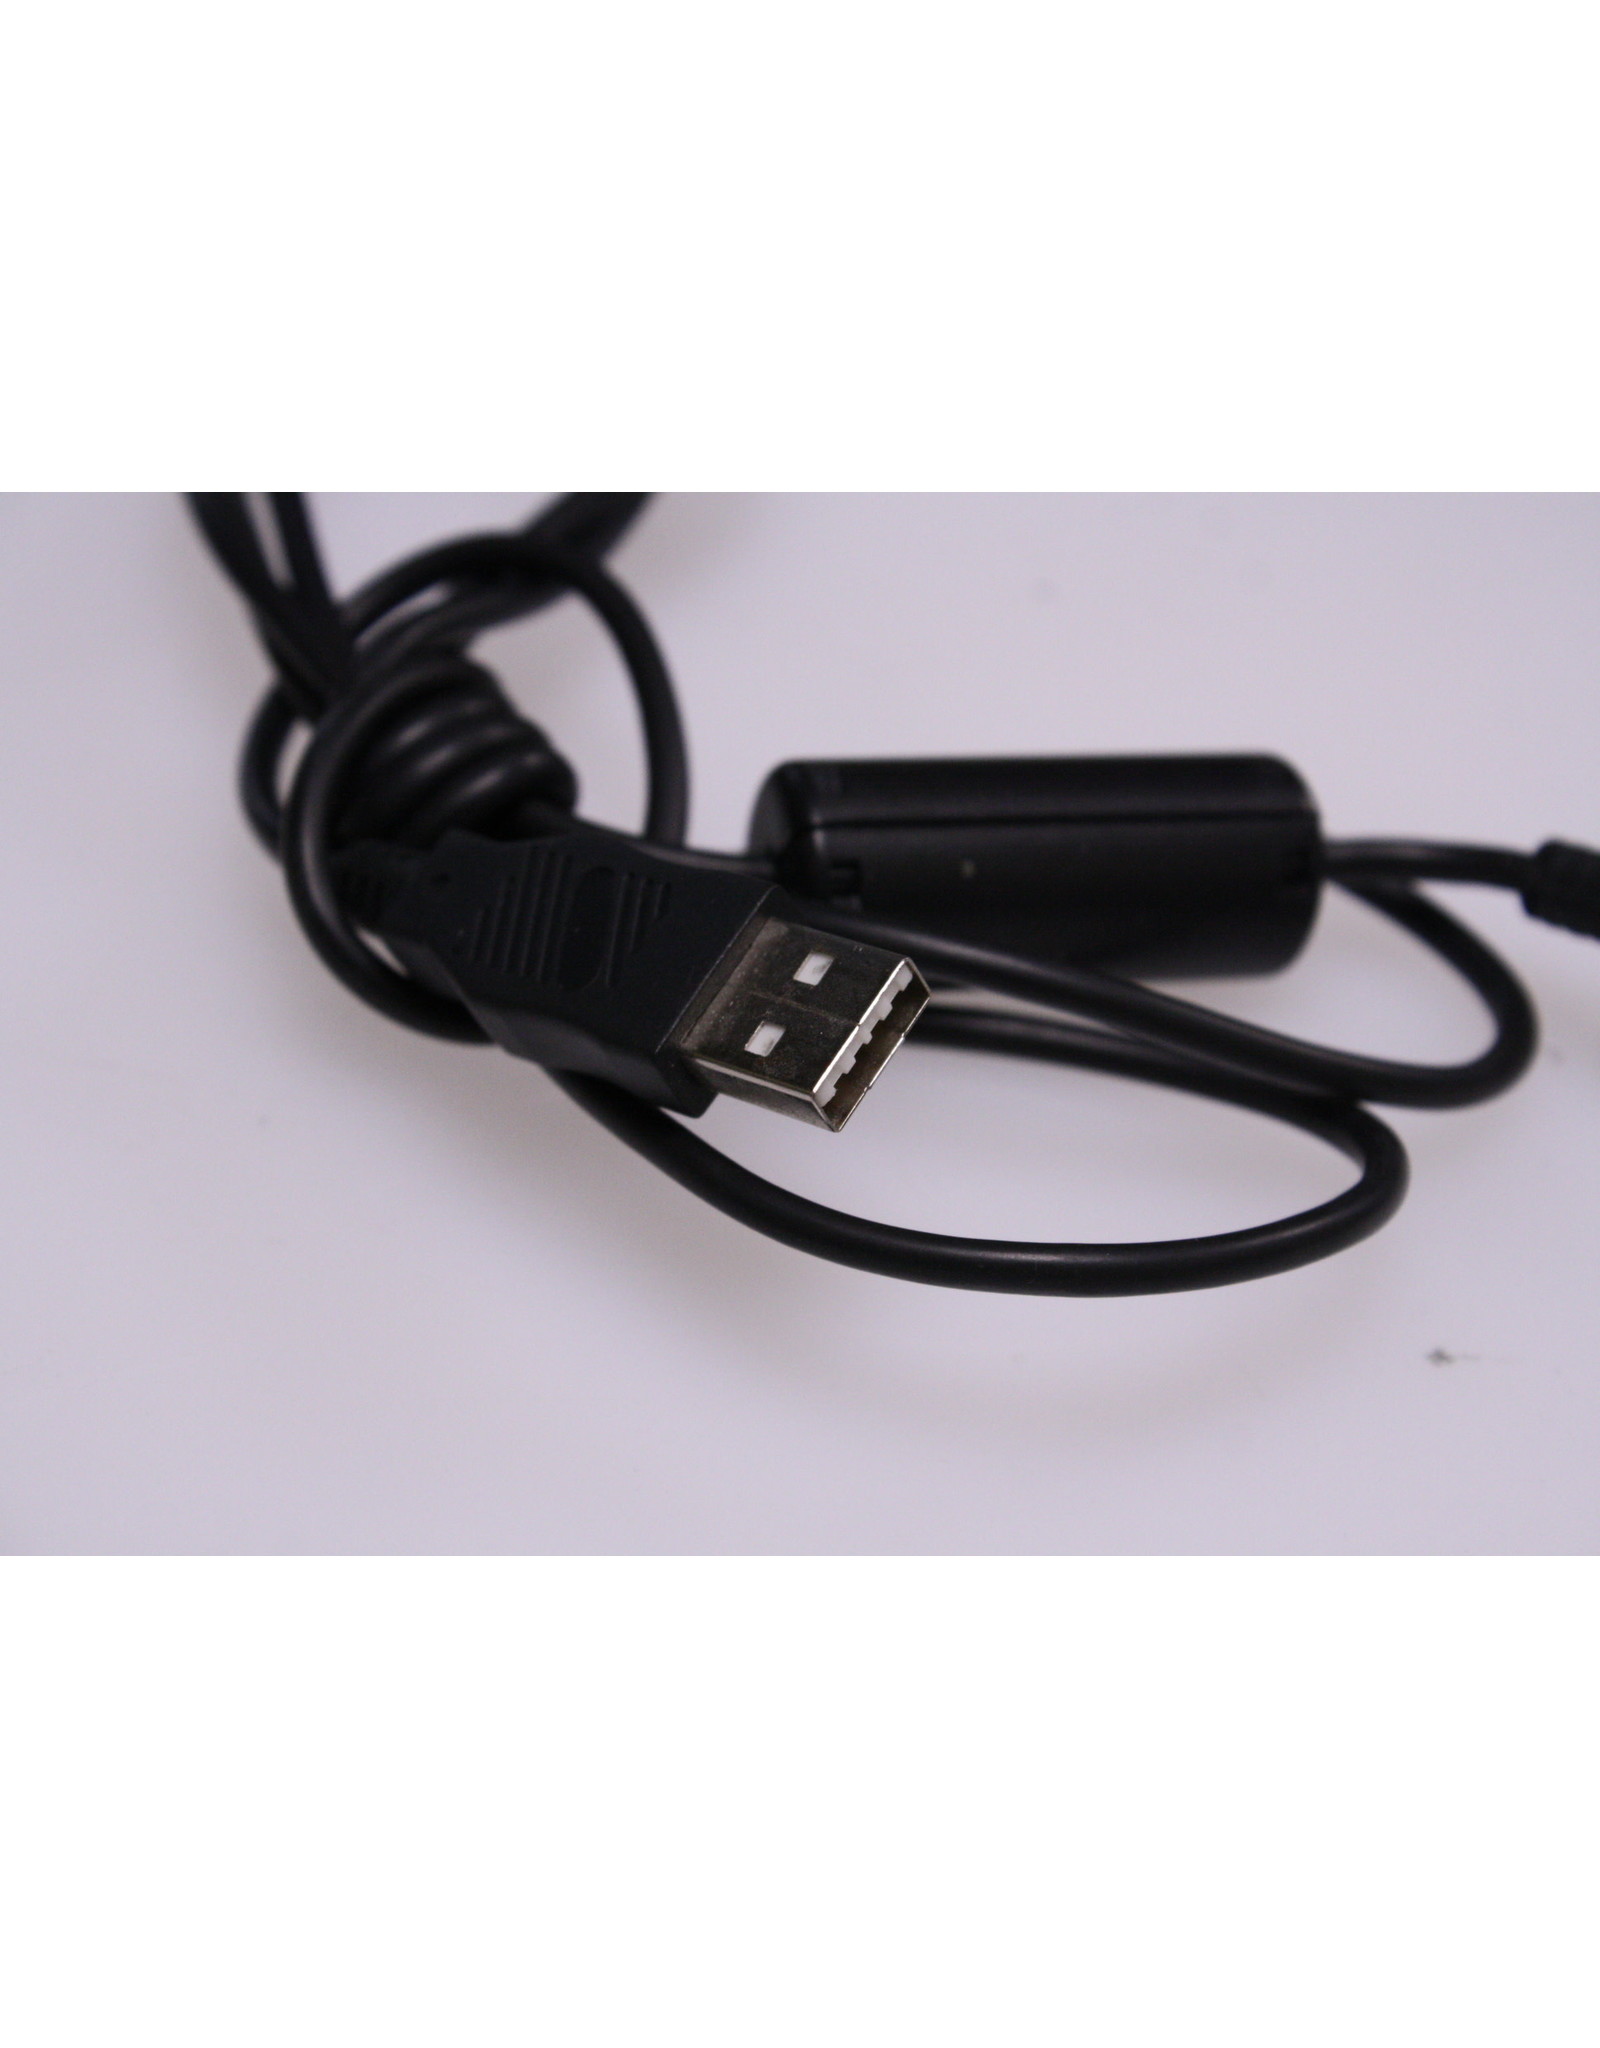 Camera USB Cable  Sony handycam digital